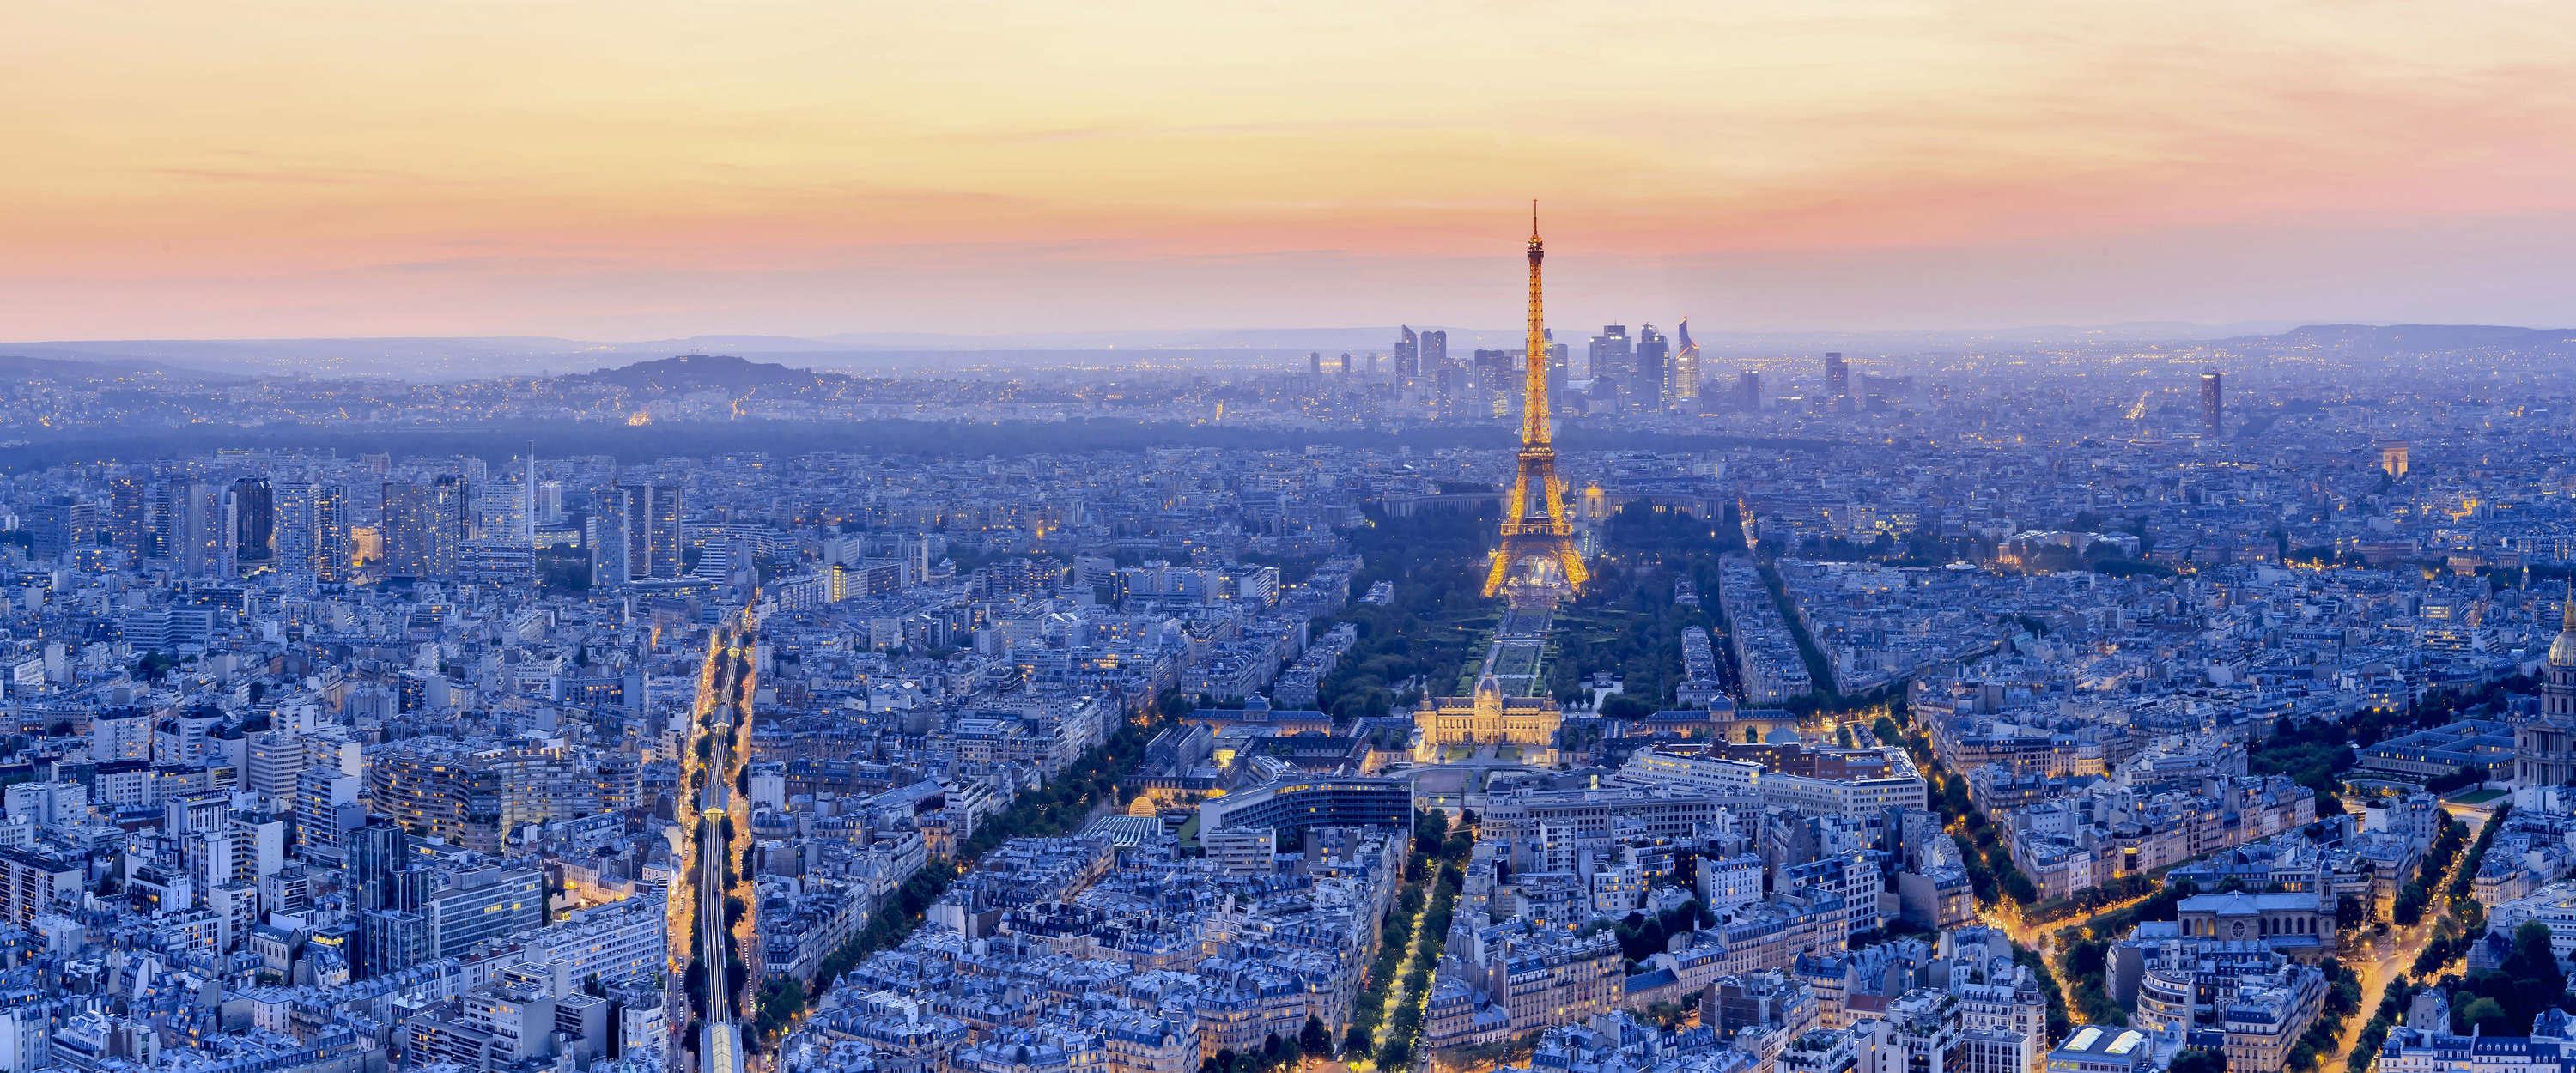             Fototapete Paris leuchtet Metropole im Morgengrauen
        